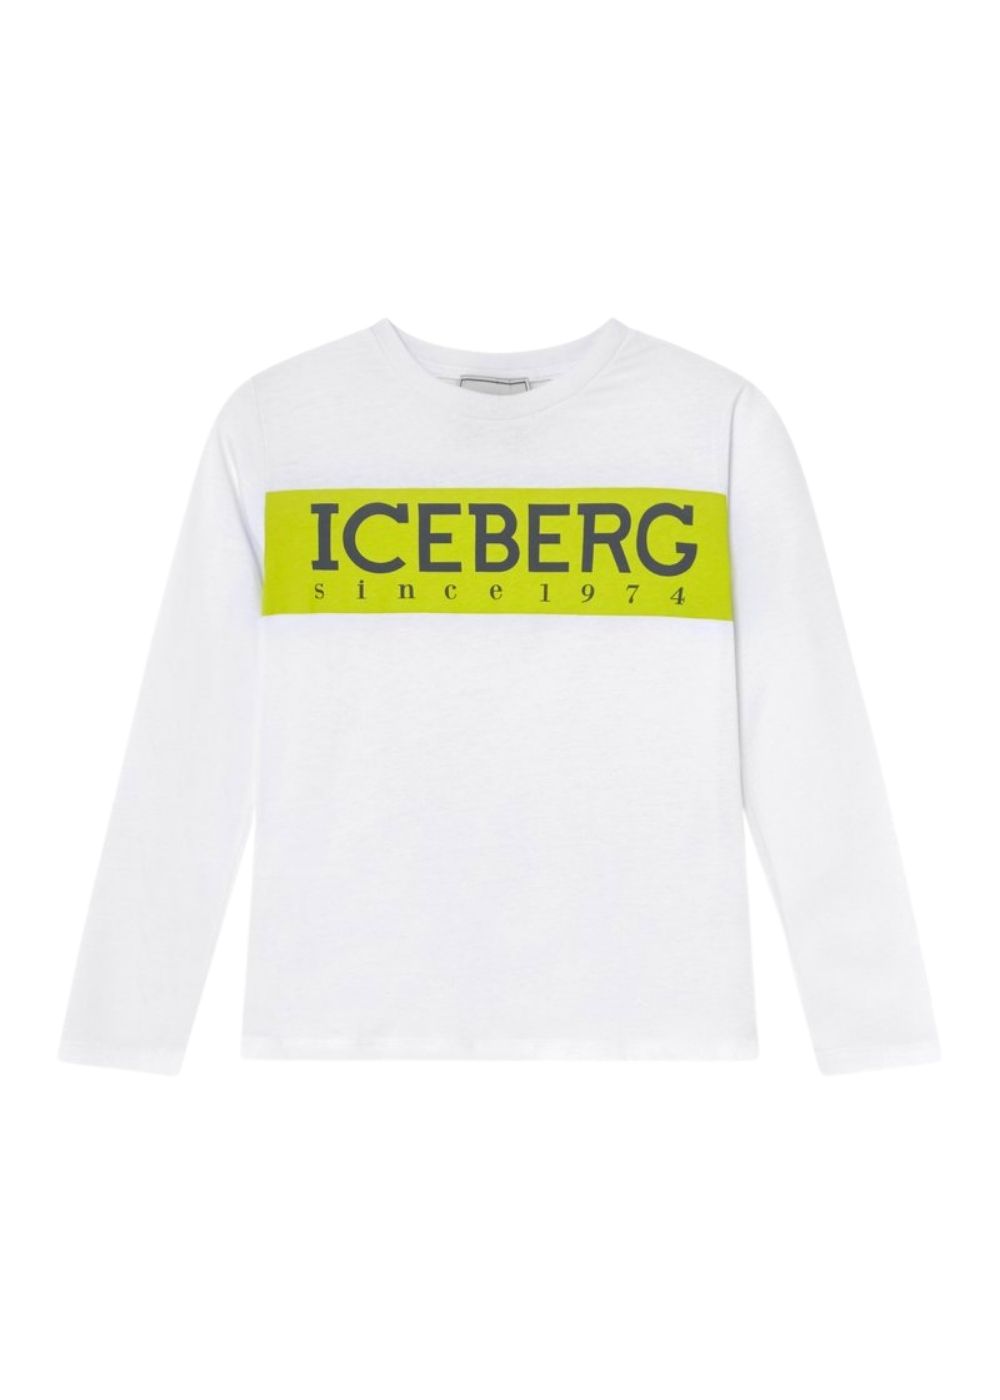 Featured image for “ICEBERG T-SHIRT LOGO”